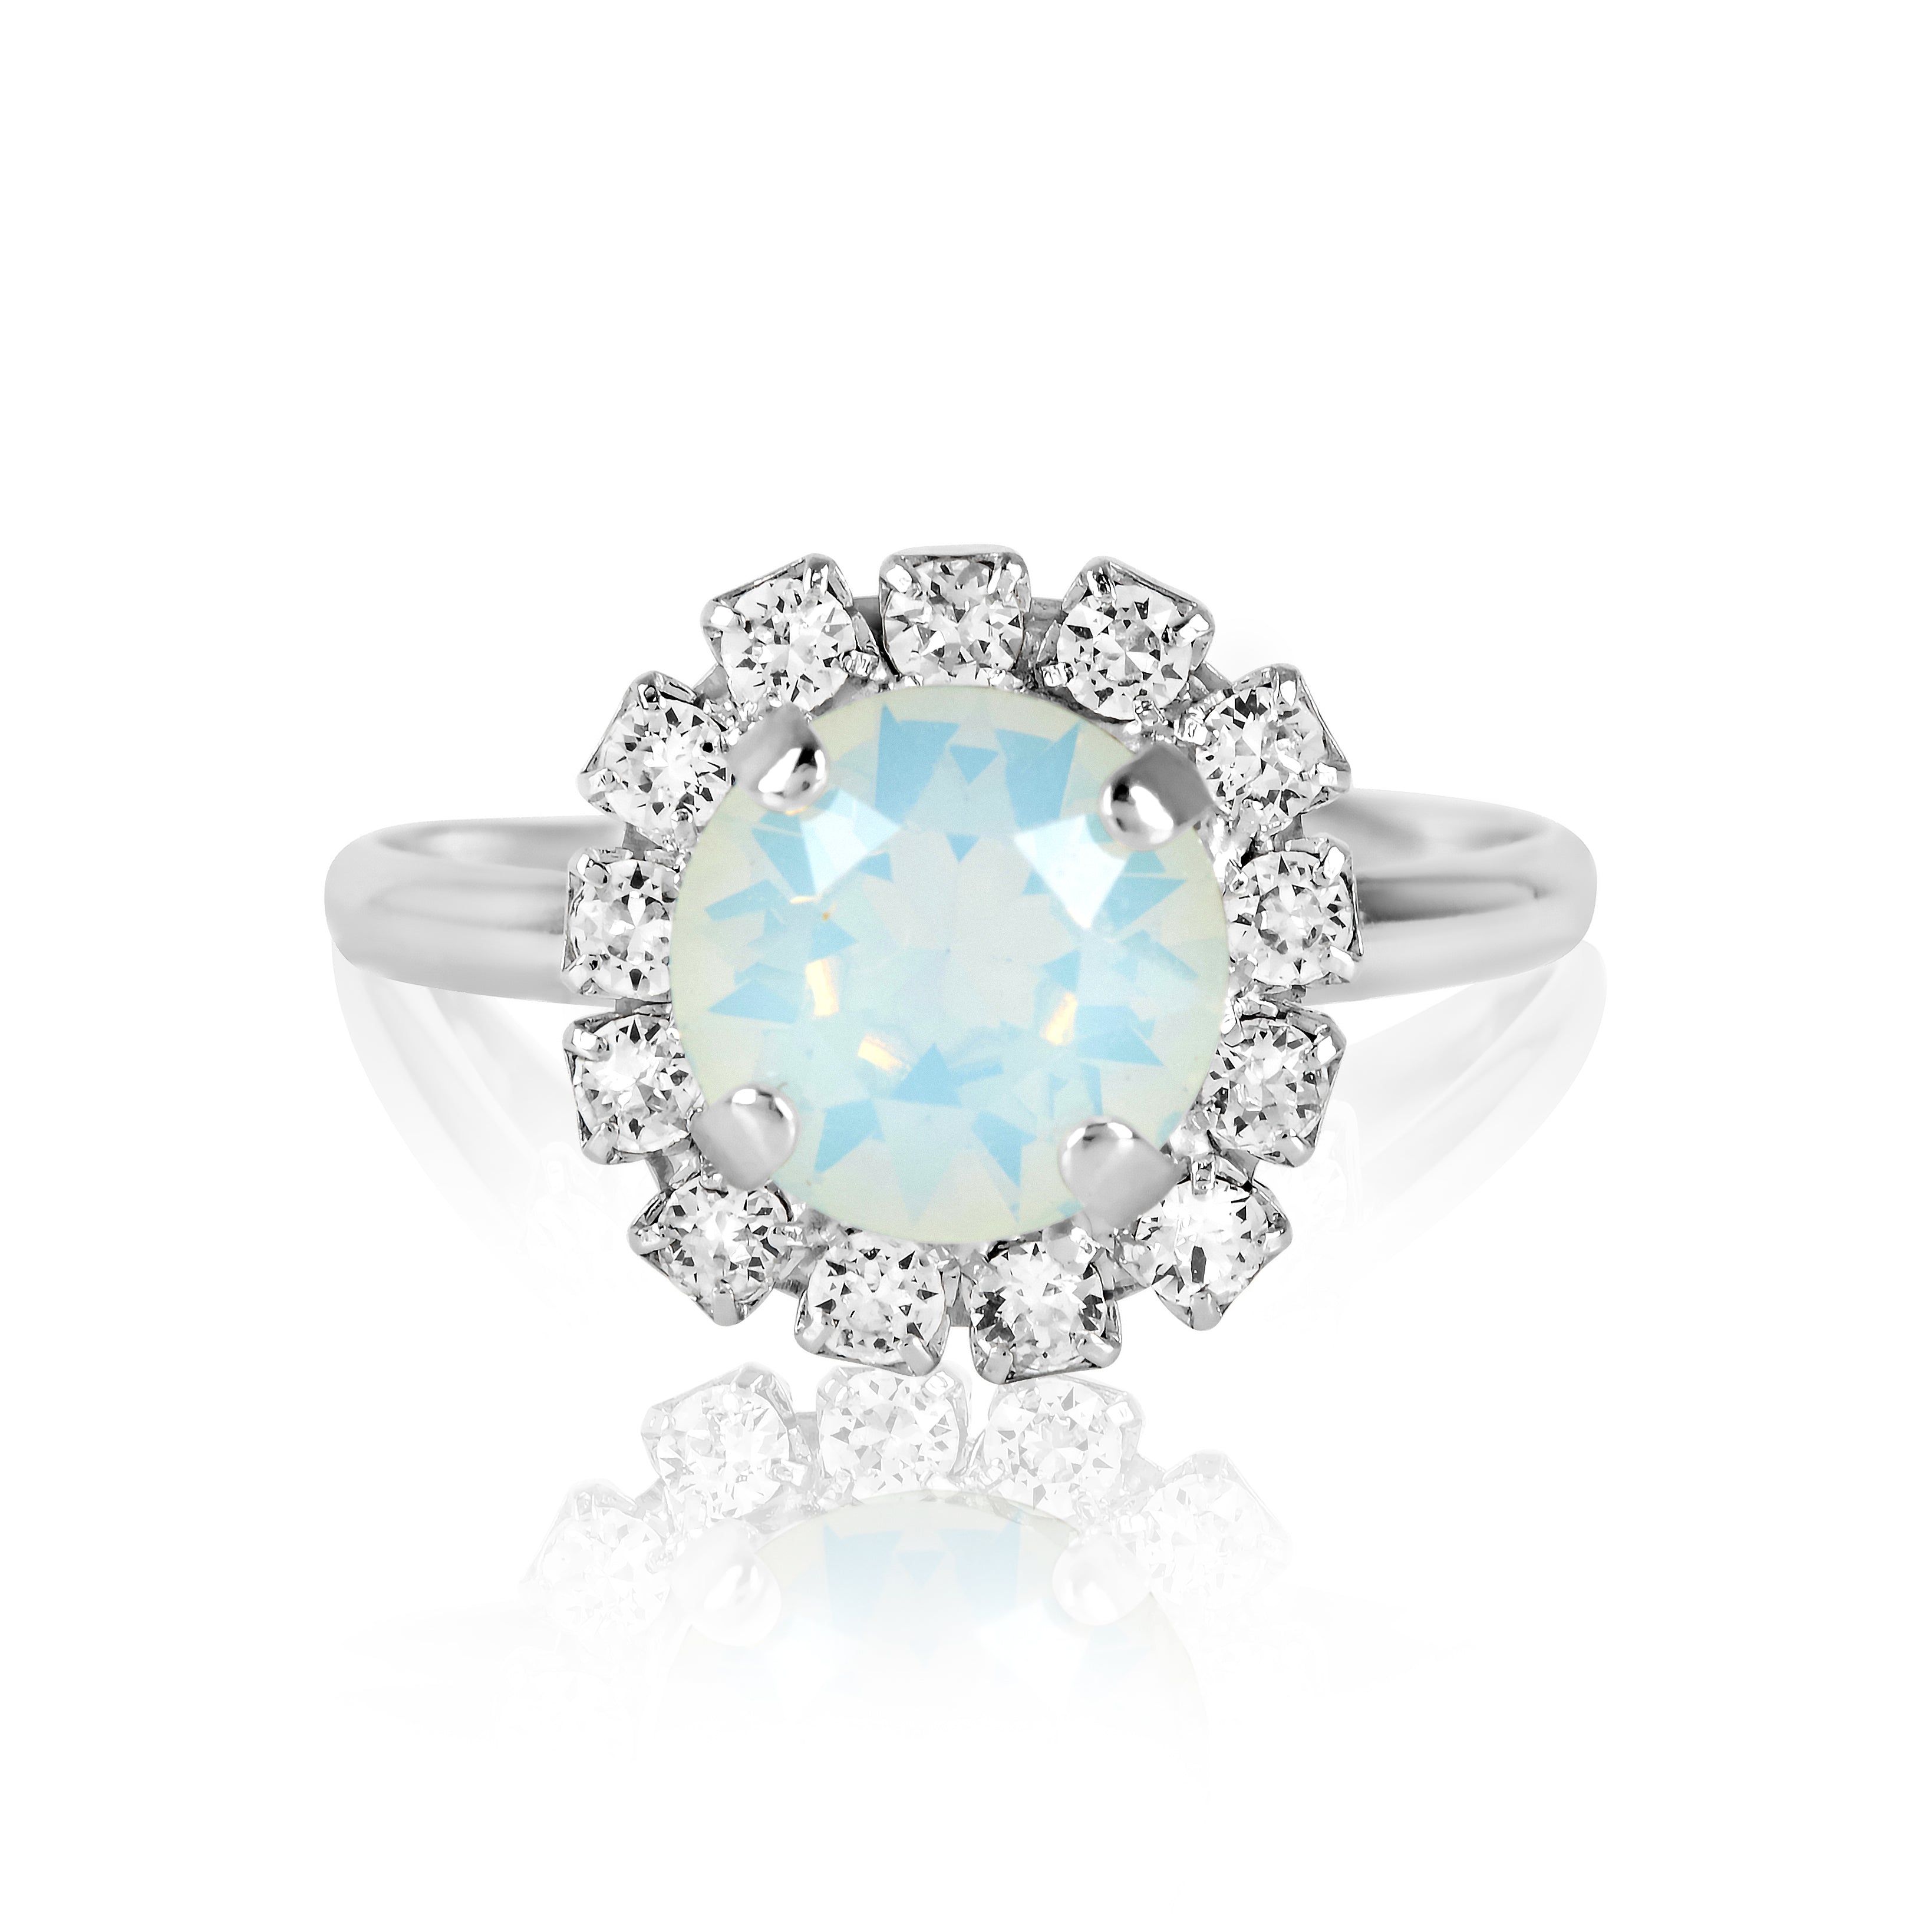 Halo Ring, Silver Ring, Dress Ring, Cocktail Ring, Statement Ring, Wedding Ring, Going Out Ring, Swarovski Ring, Opal Ring, Beautiful Ring, Blue Ring